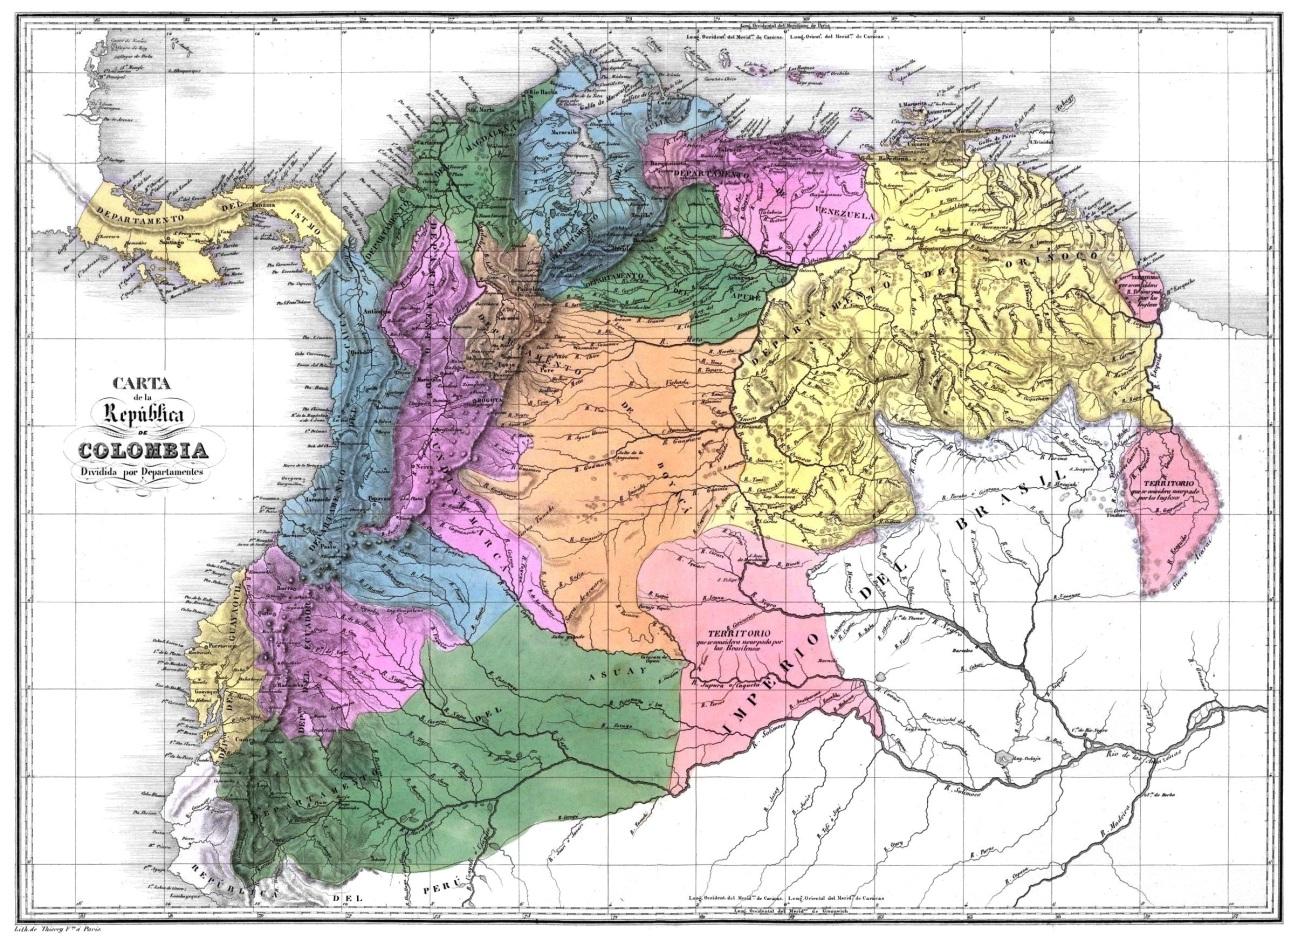 https://upload.wikimedia.org/wikipedia/commons/5/52/Gran_Colombia_map.jpg